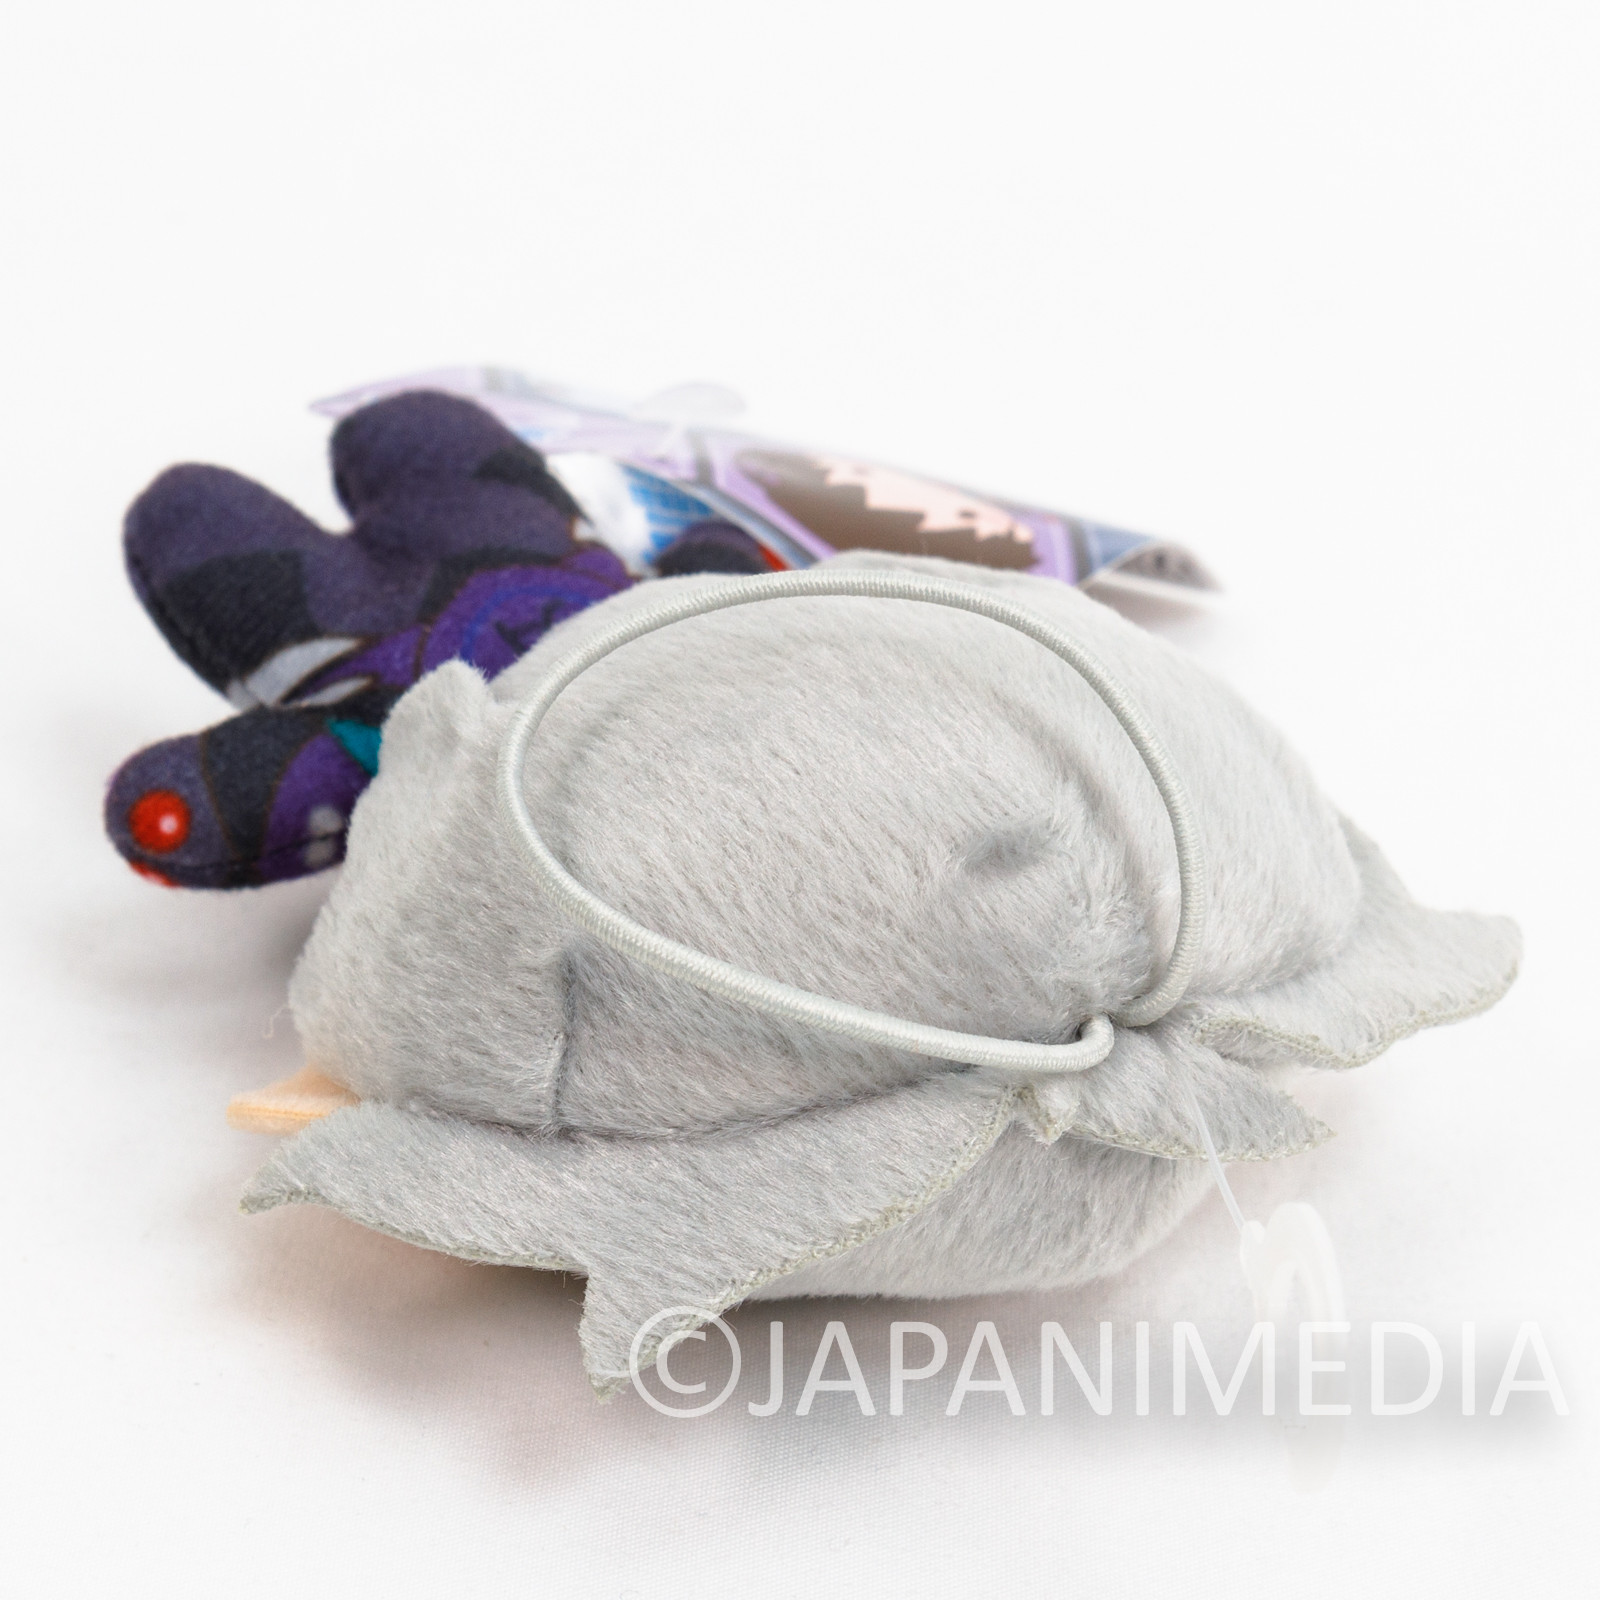 Evangelion Kaworu Nagisa Plugsuit Mini Plush Doll SEGA JAPAN ANIME MANGA 2